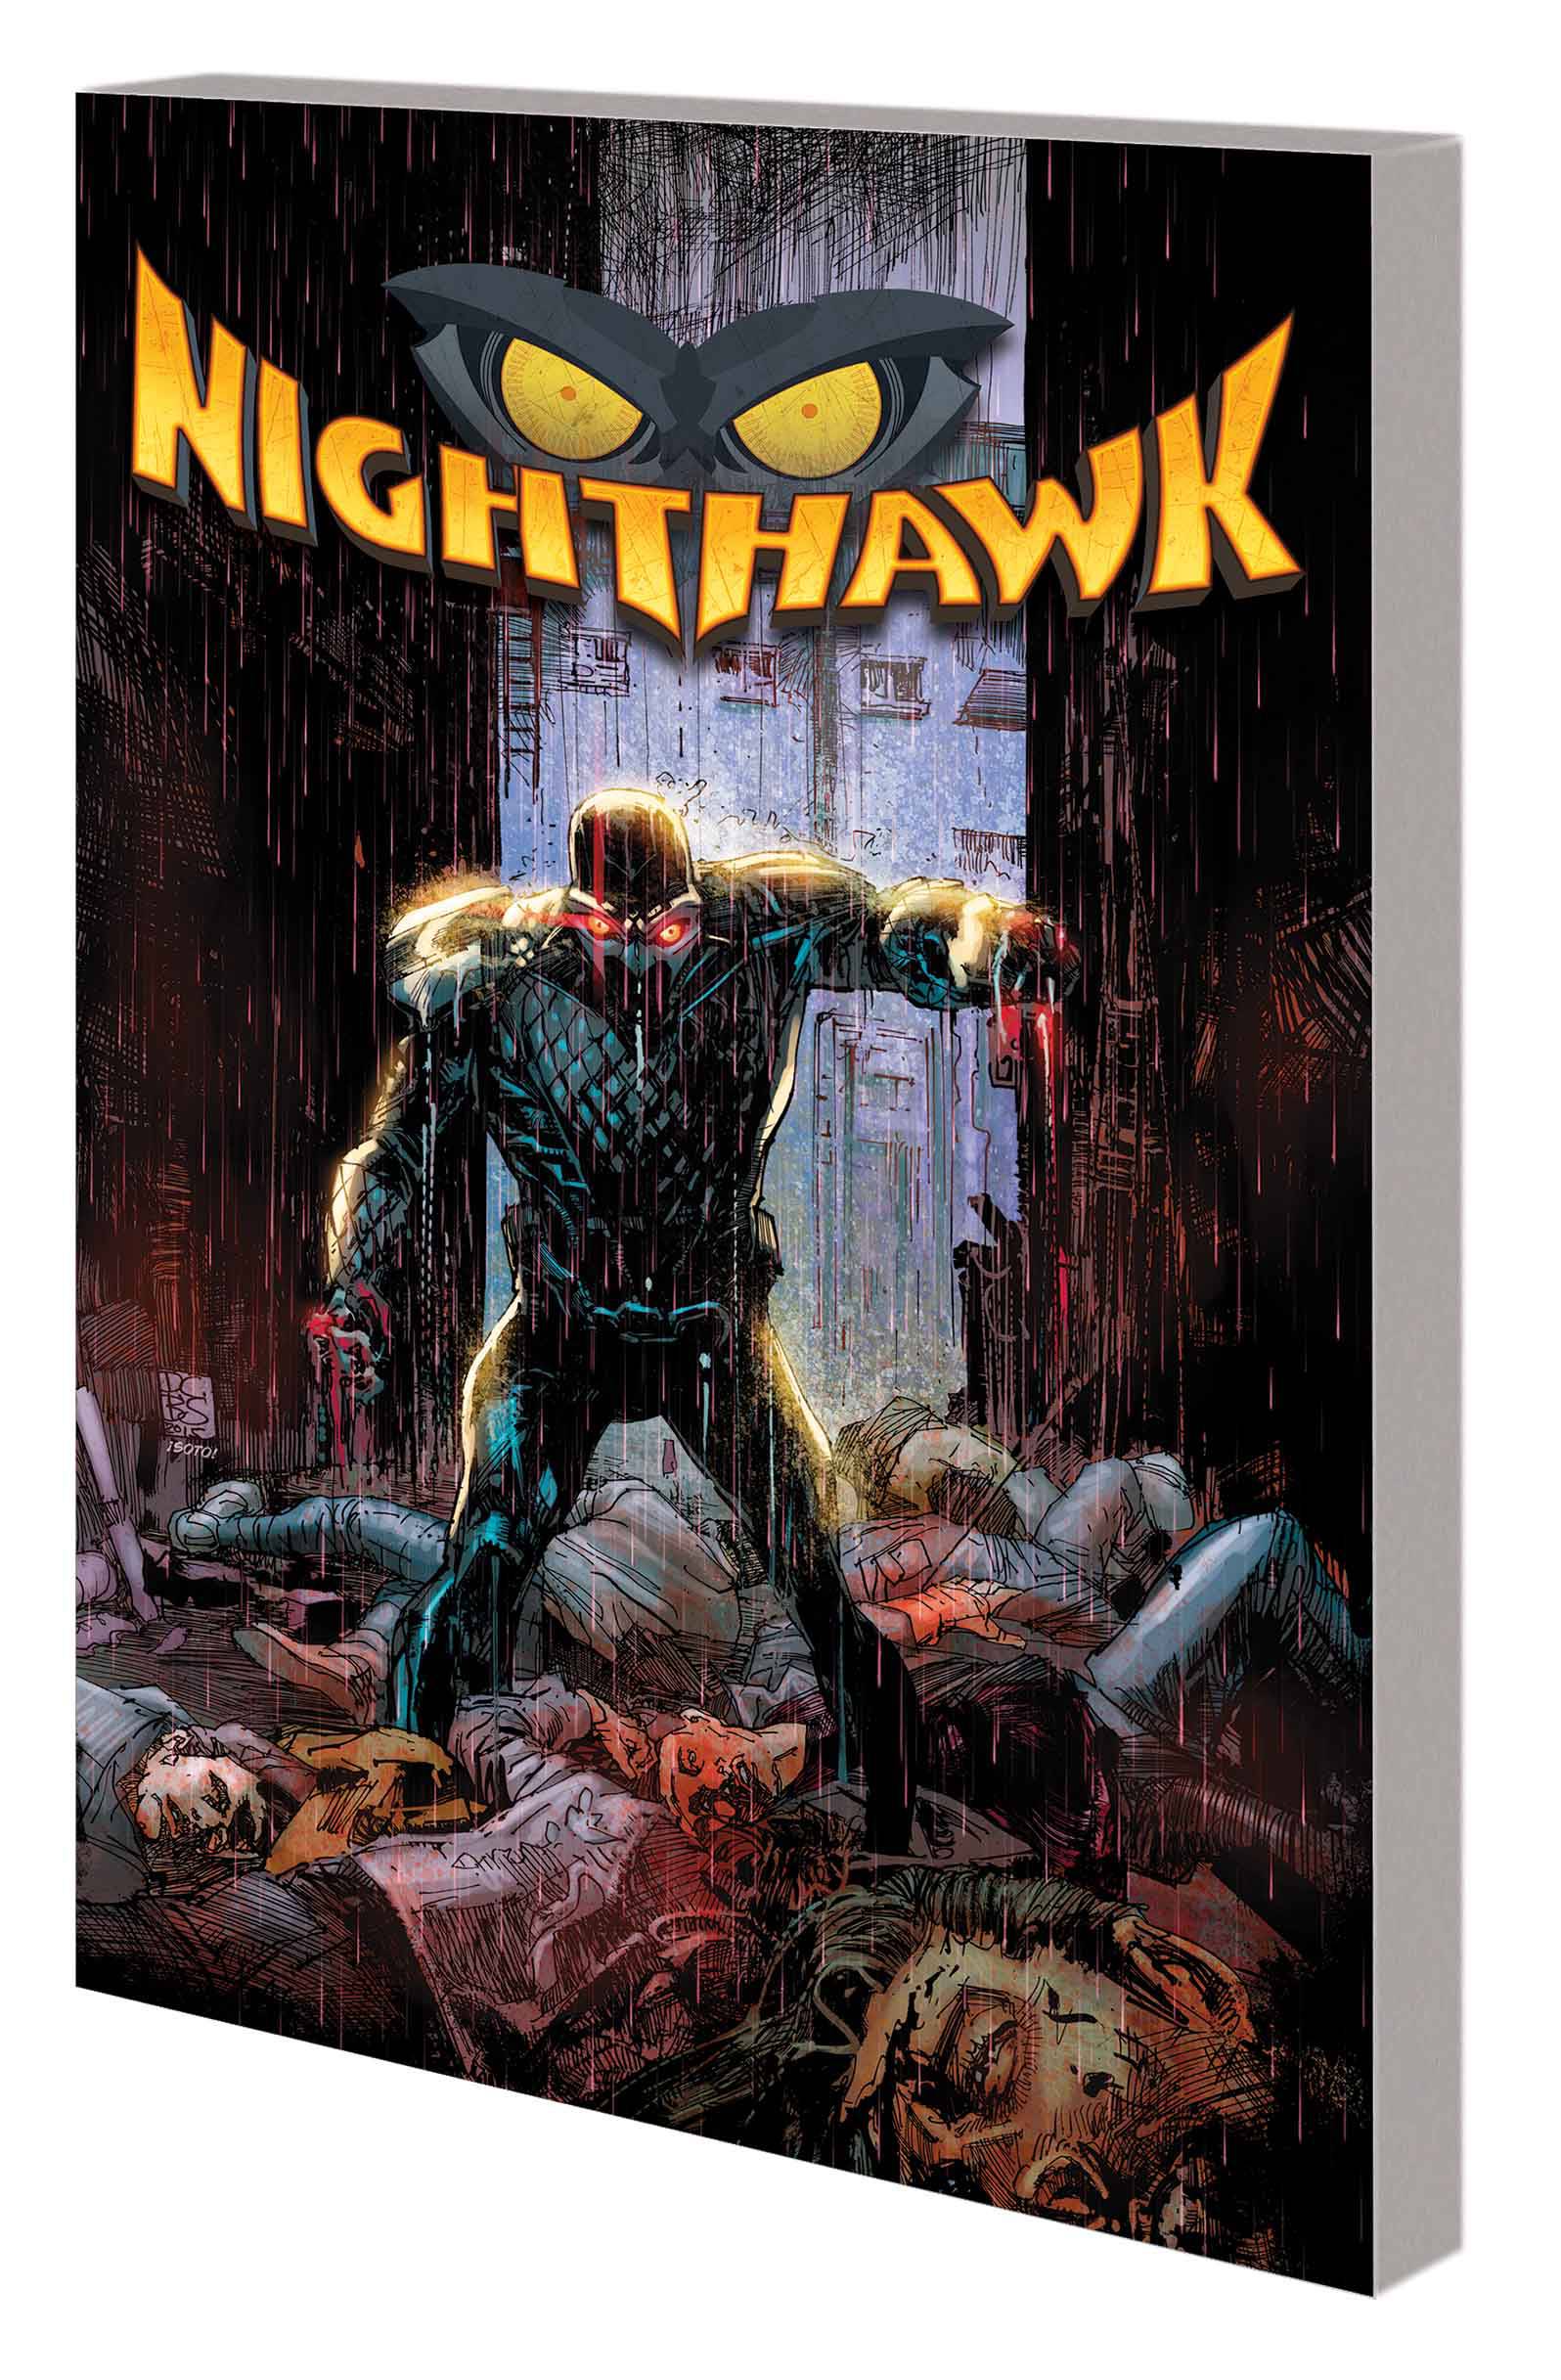 Nighthawk Graphic Novel Hate Makes Hate